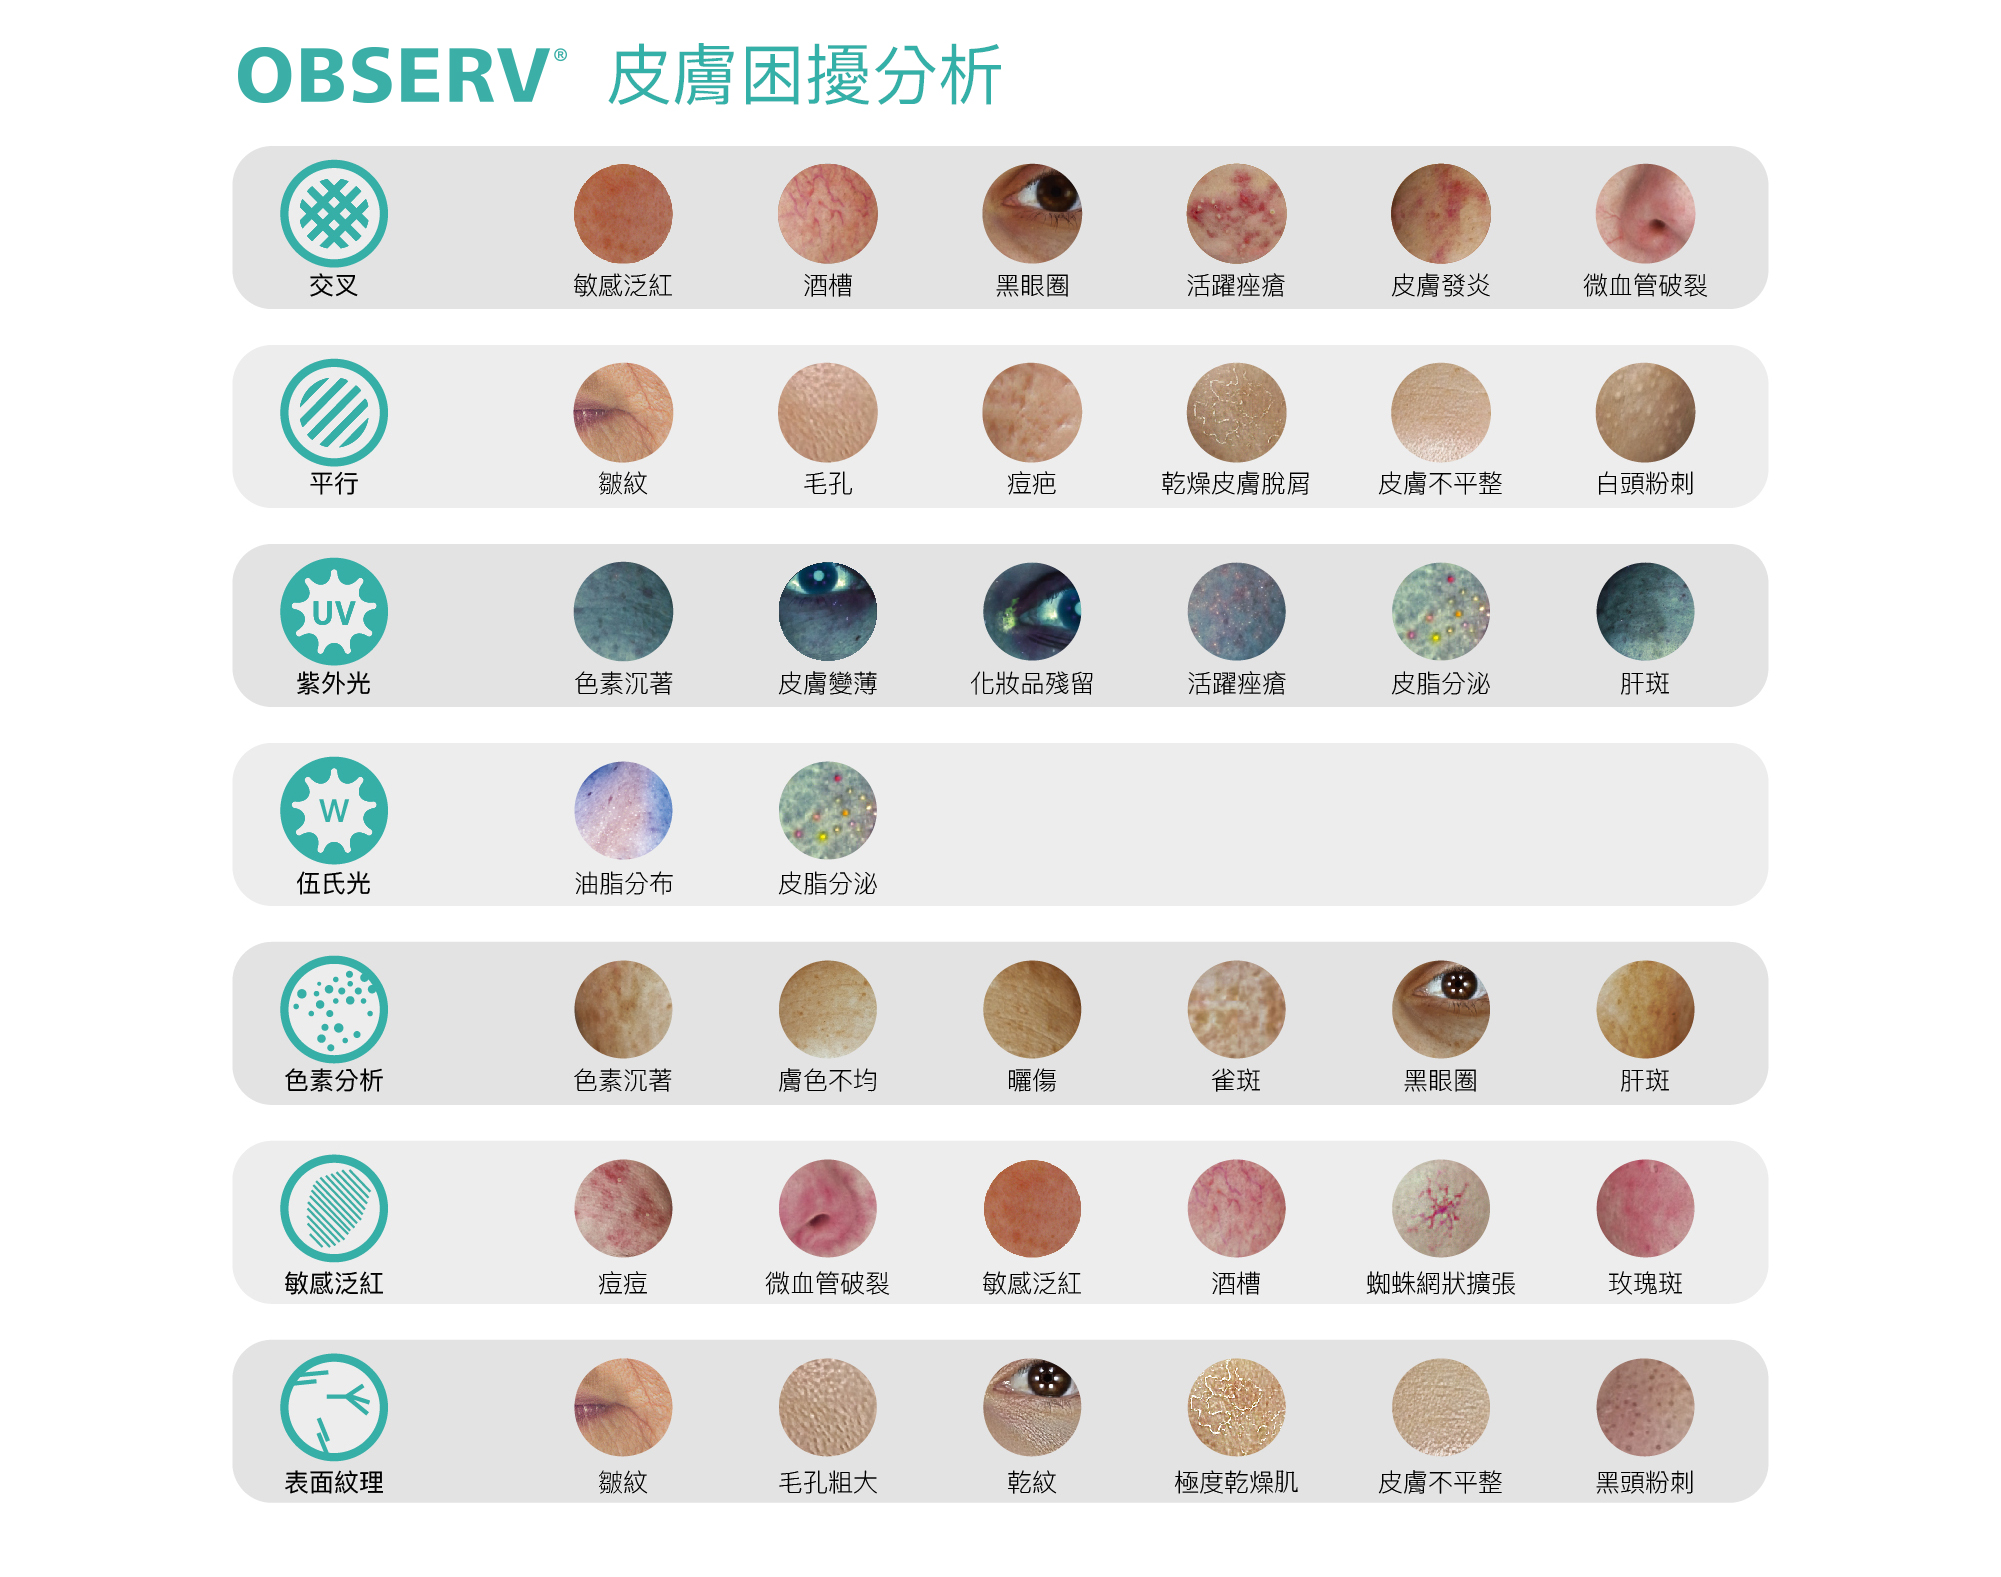 observ520x全臉肌膚檢測儀-05